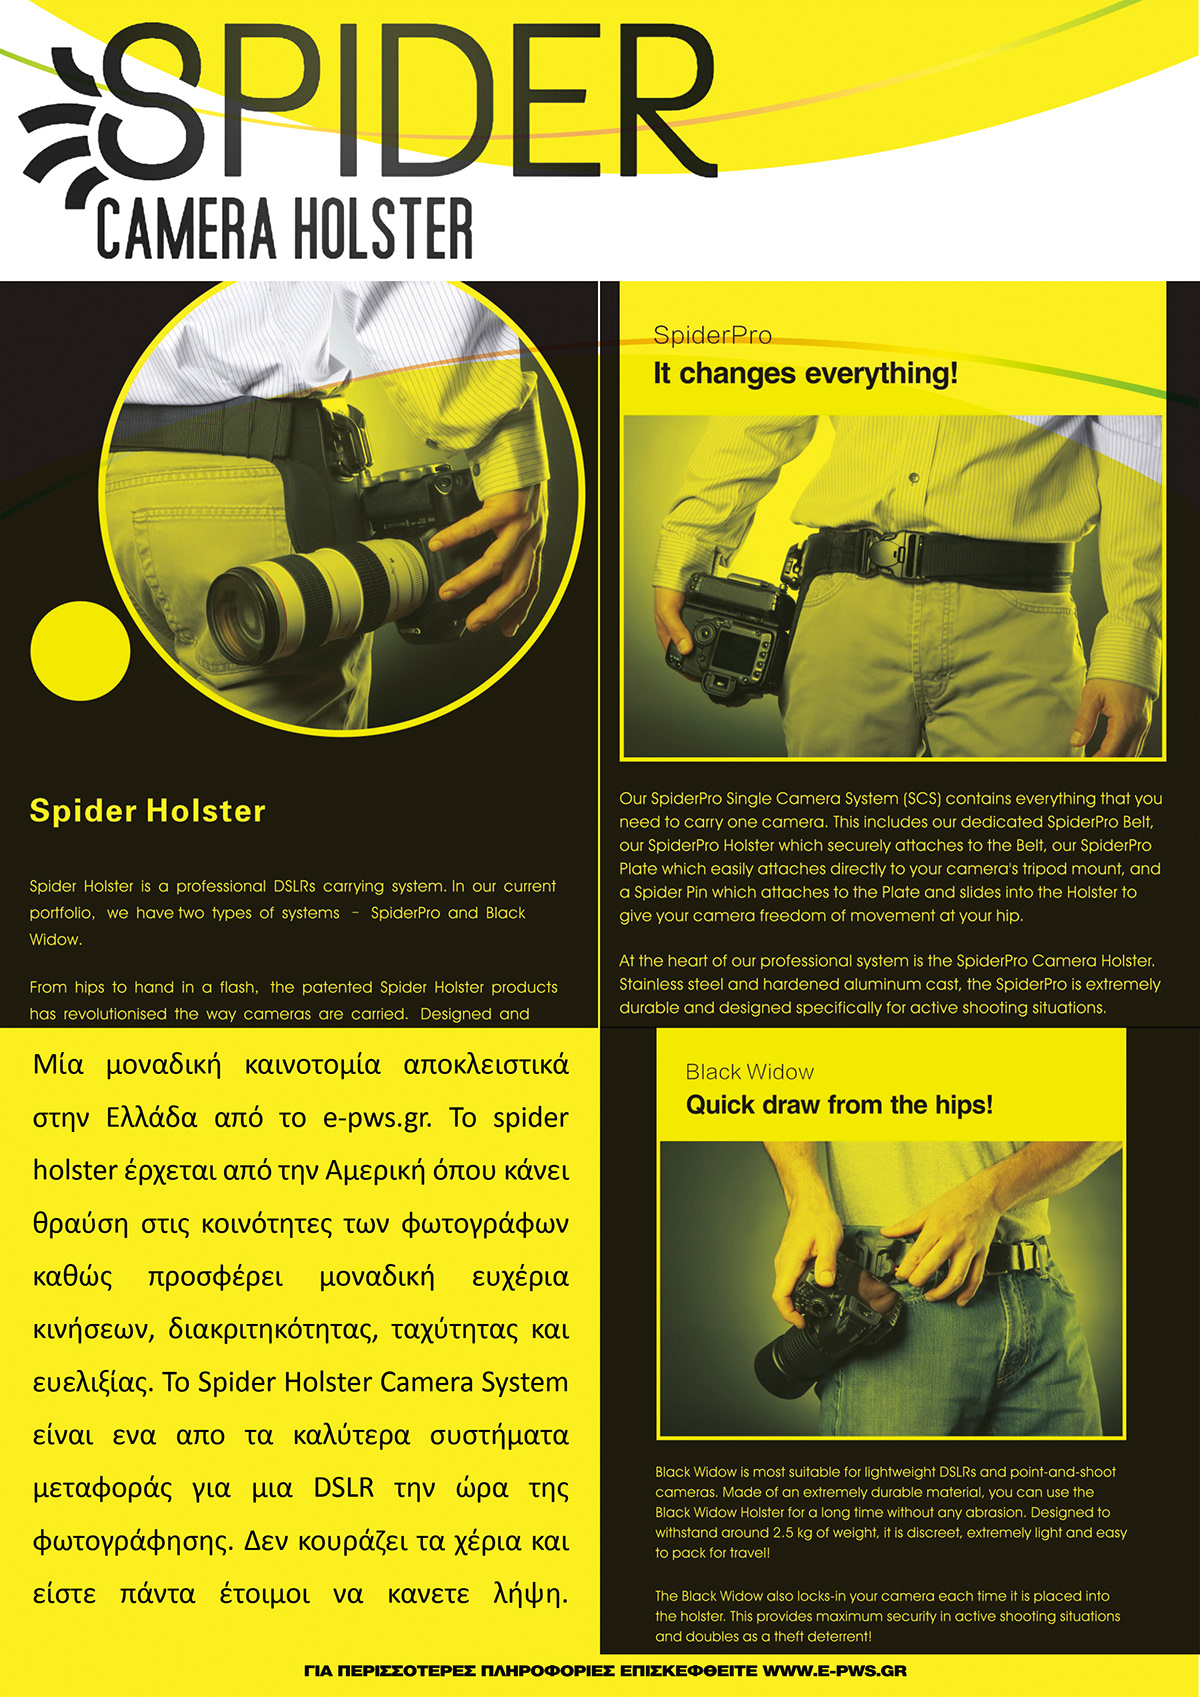 goboda x-rite thinktank PWS Zeiss fuji fujifilm X-Pro1 icelight spider photographer magazine advertisement Product Flyer poster